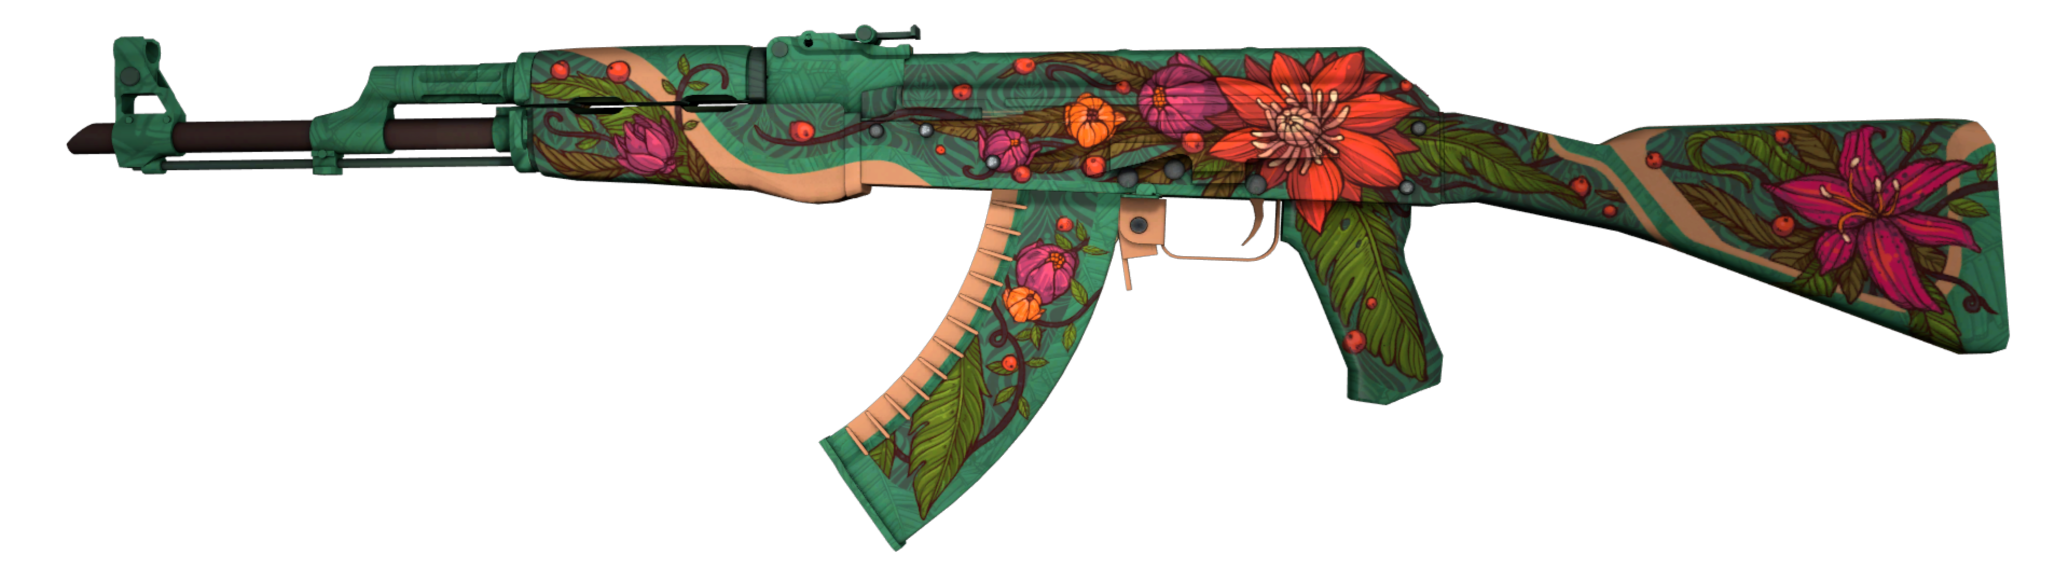 AK-47 Wild Lotus – Factory New